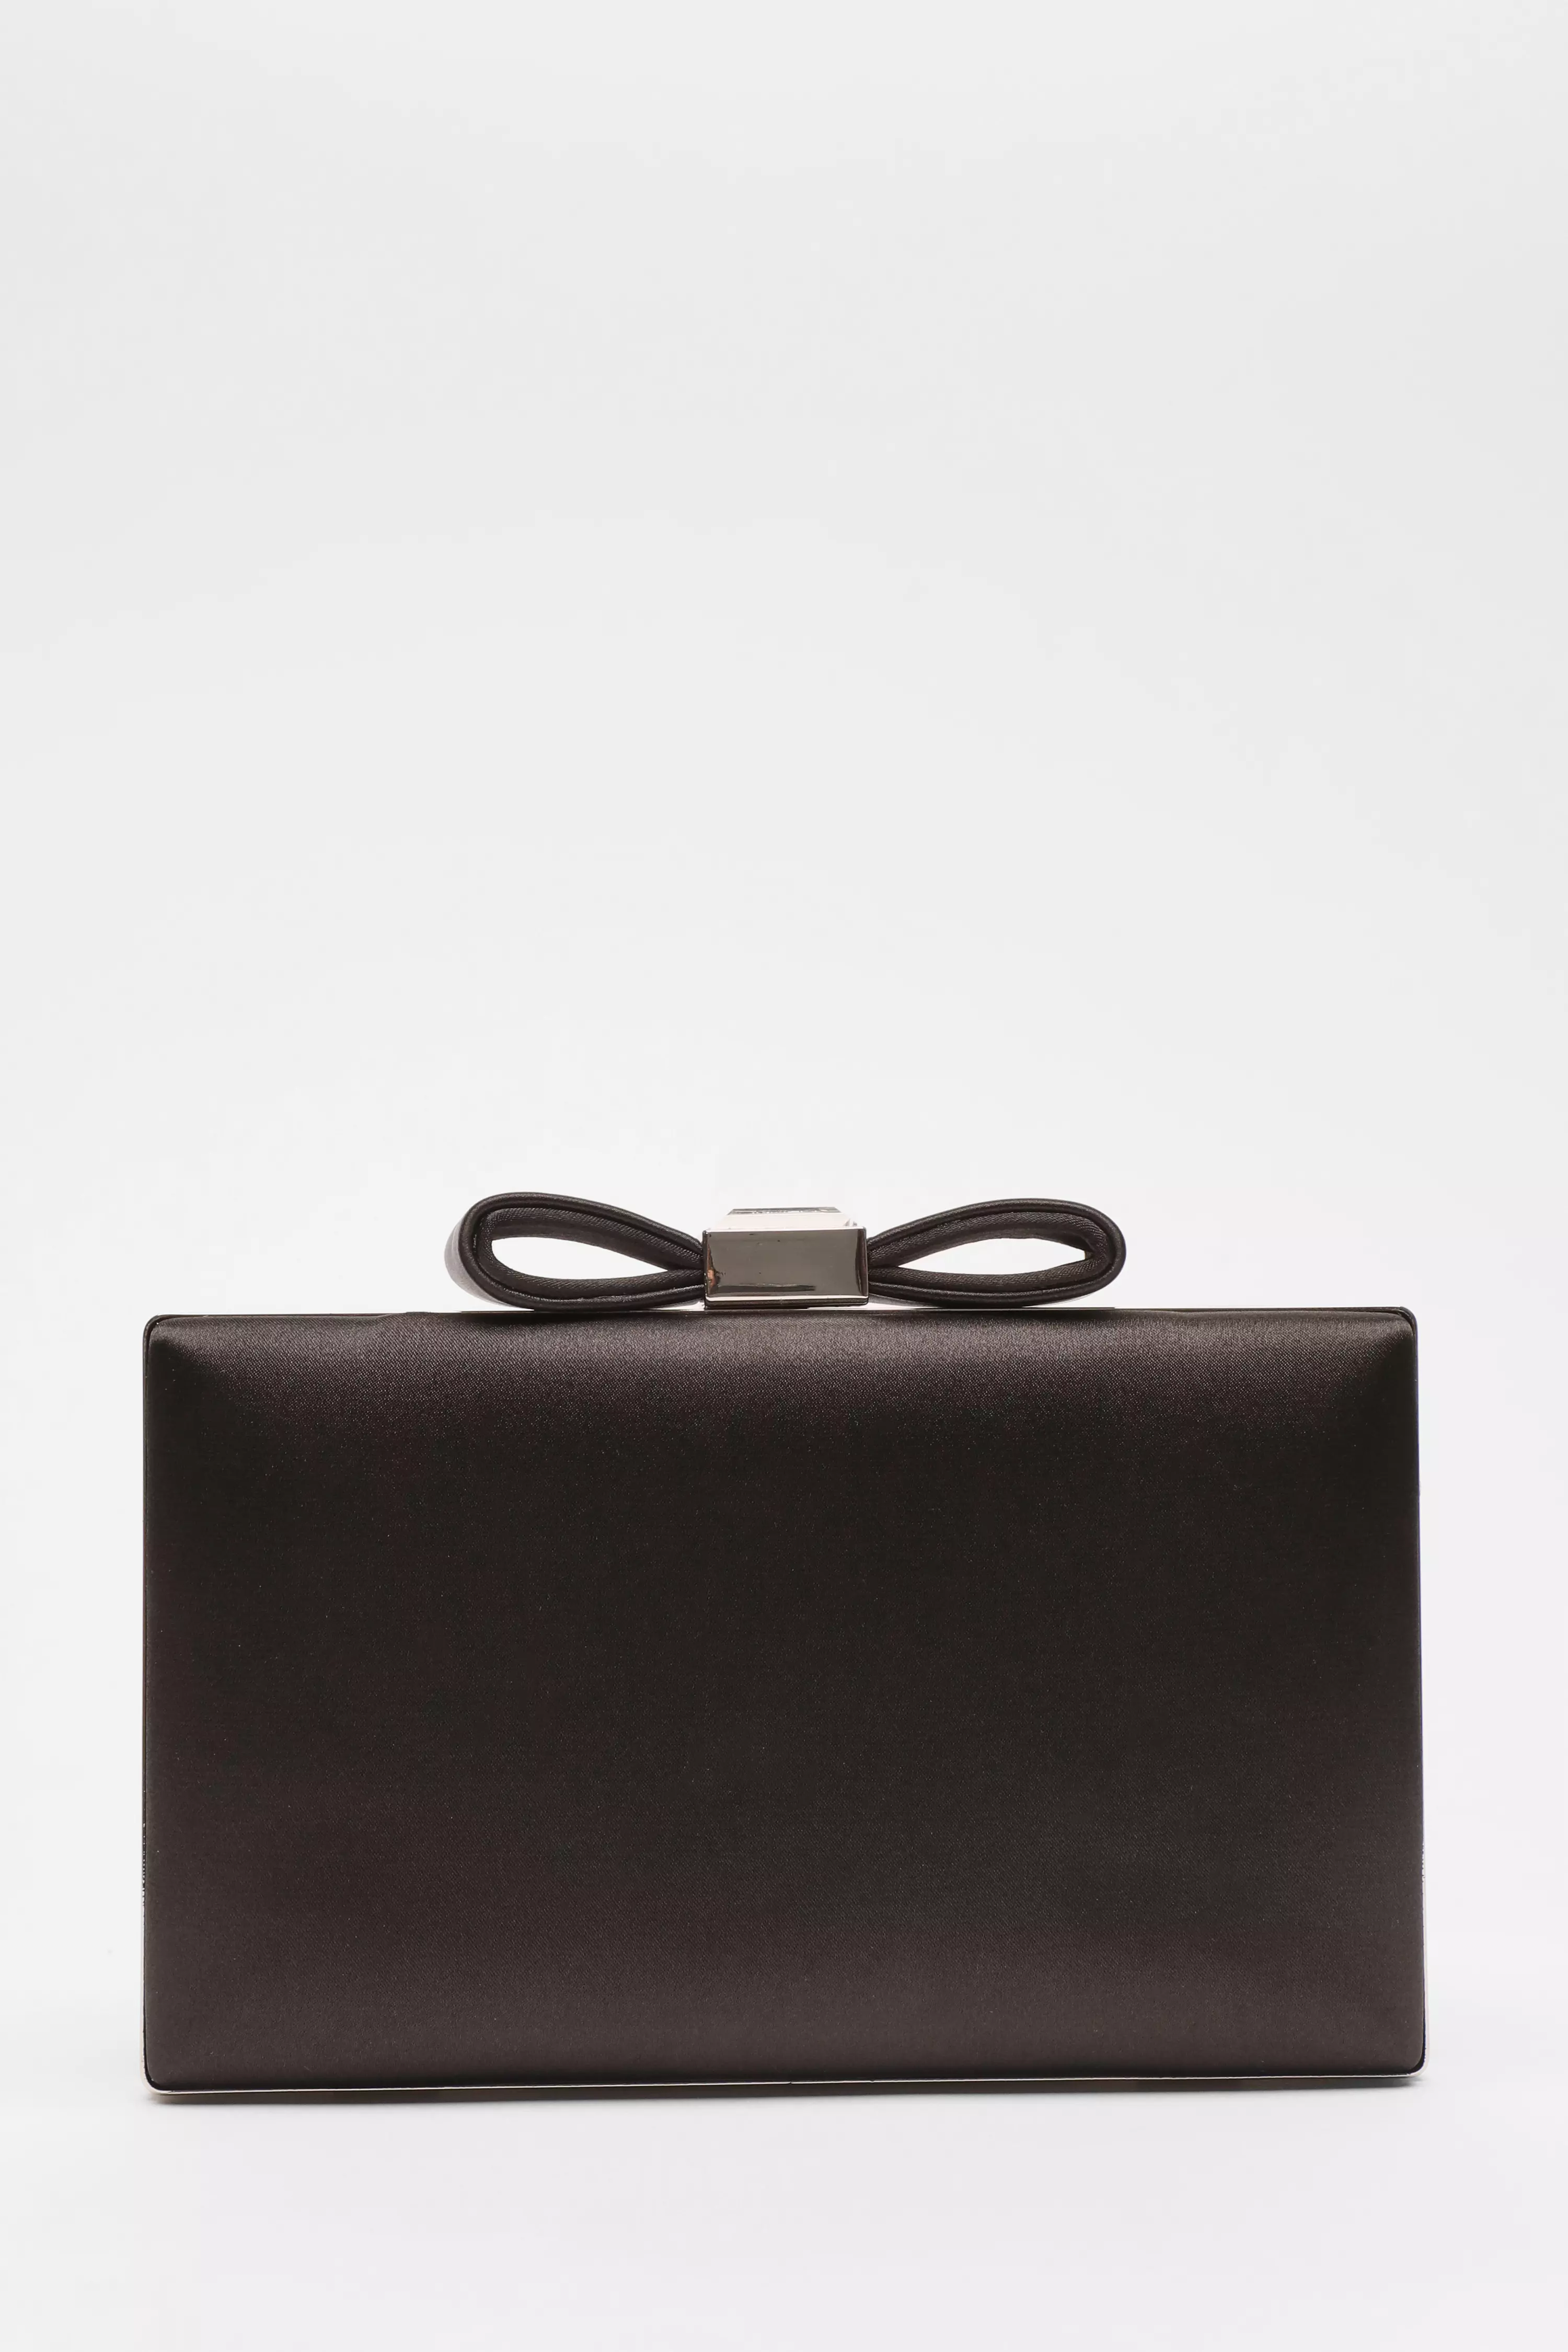 Black Satin Bow Clasp Clutch Bag